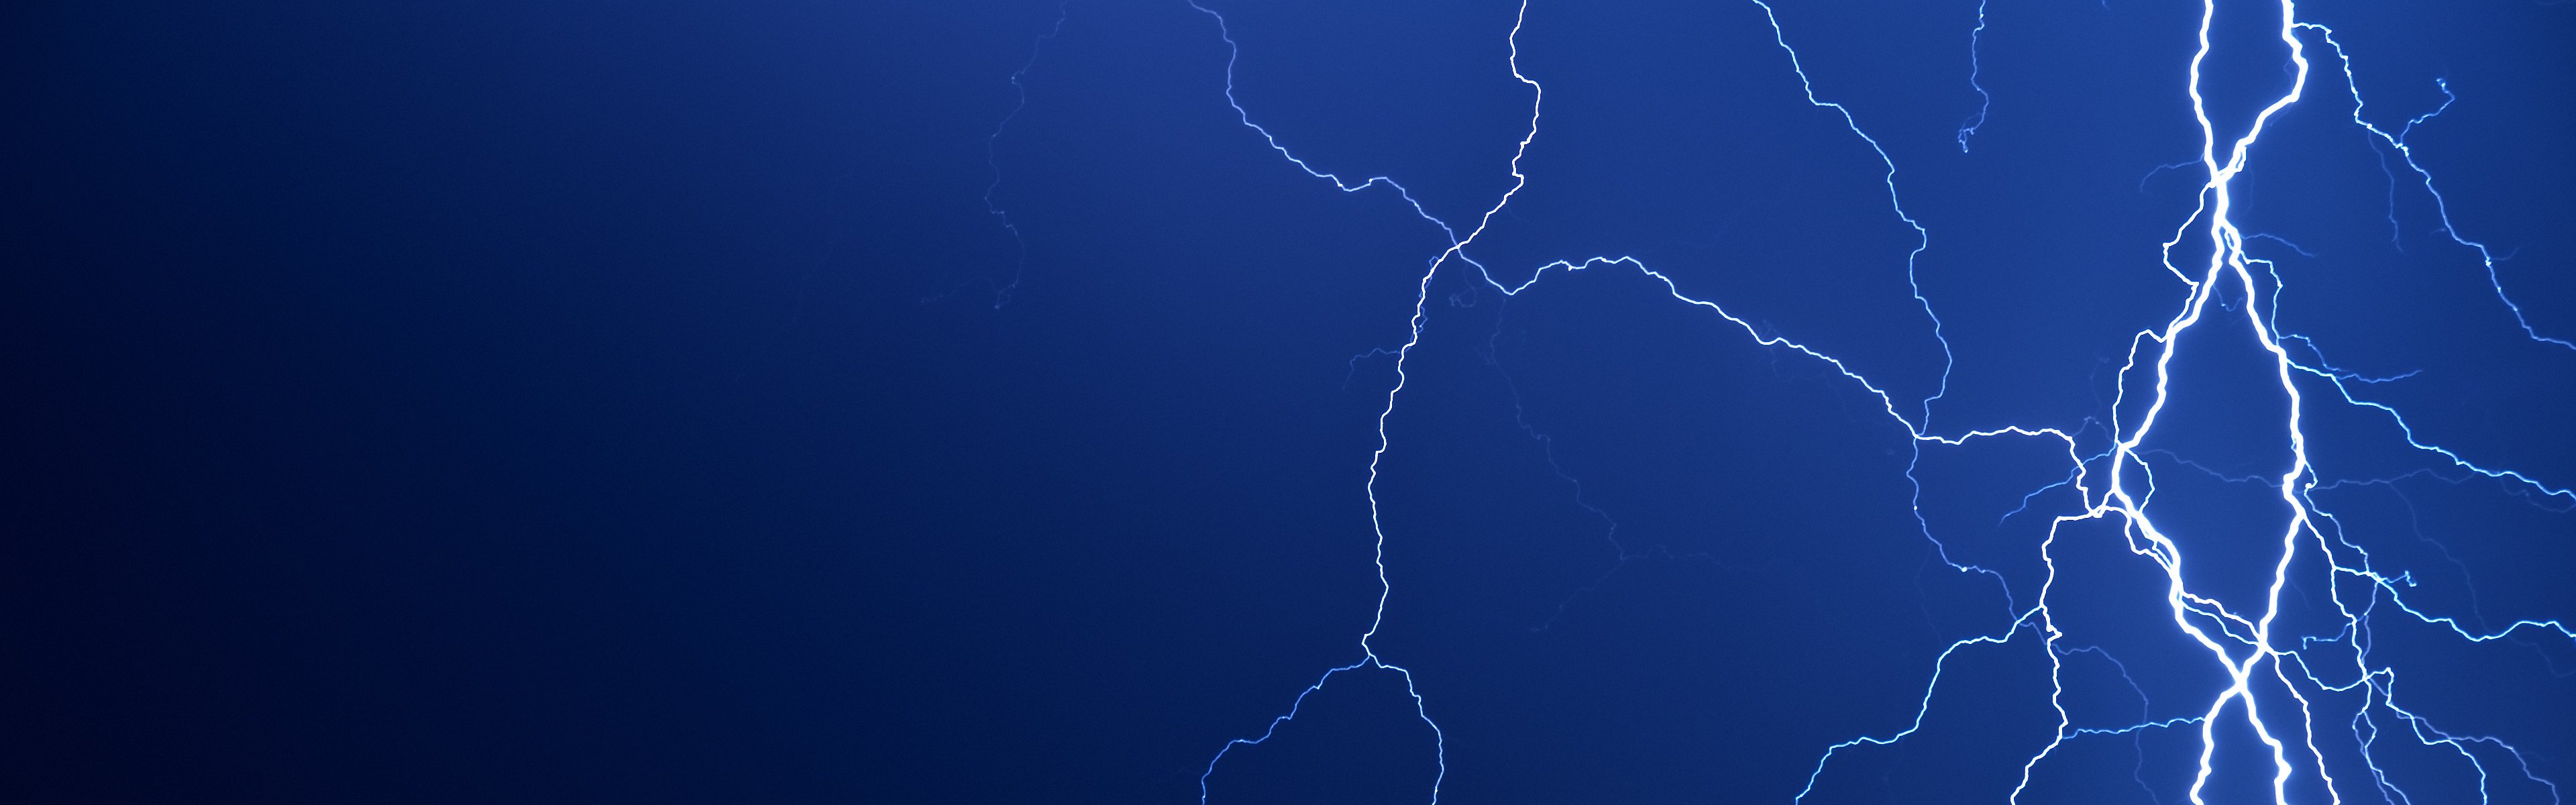 Weather Lightning Wallpaper